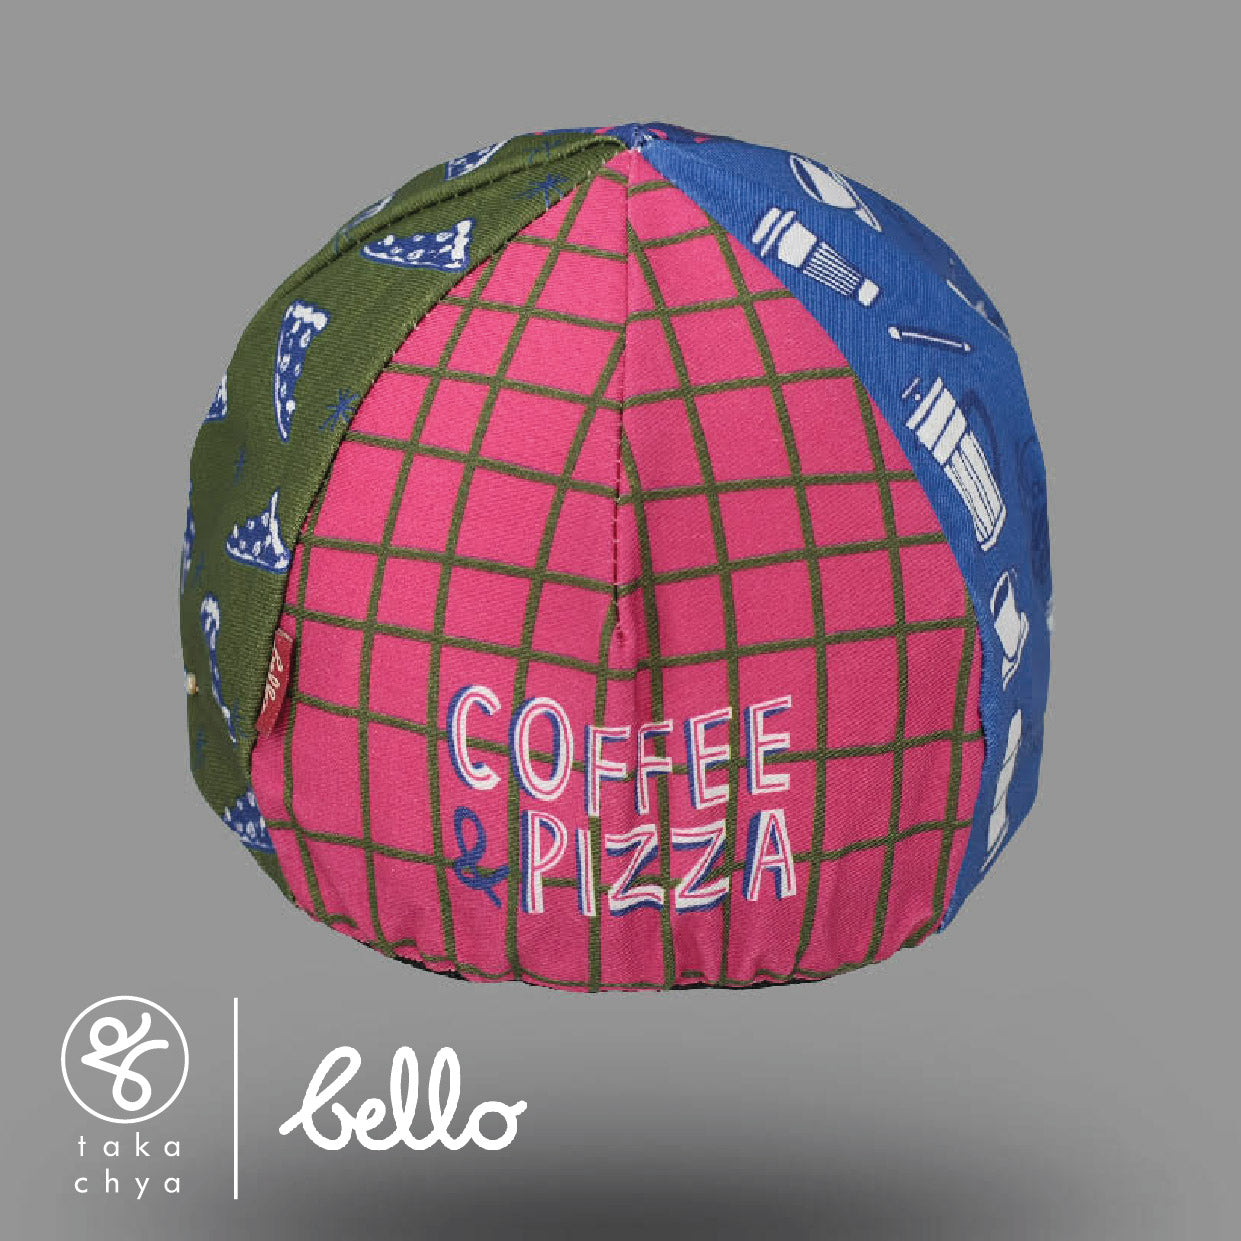 Coffee & Pizza - Bello Cyclist Designer Collaboration Cycling Cap